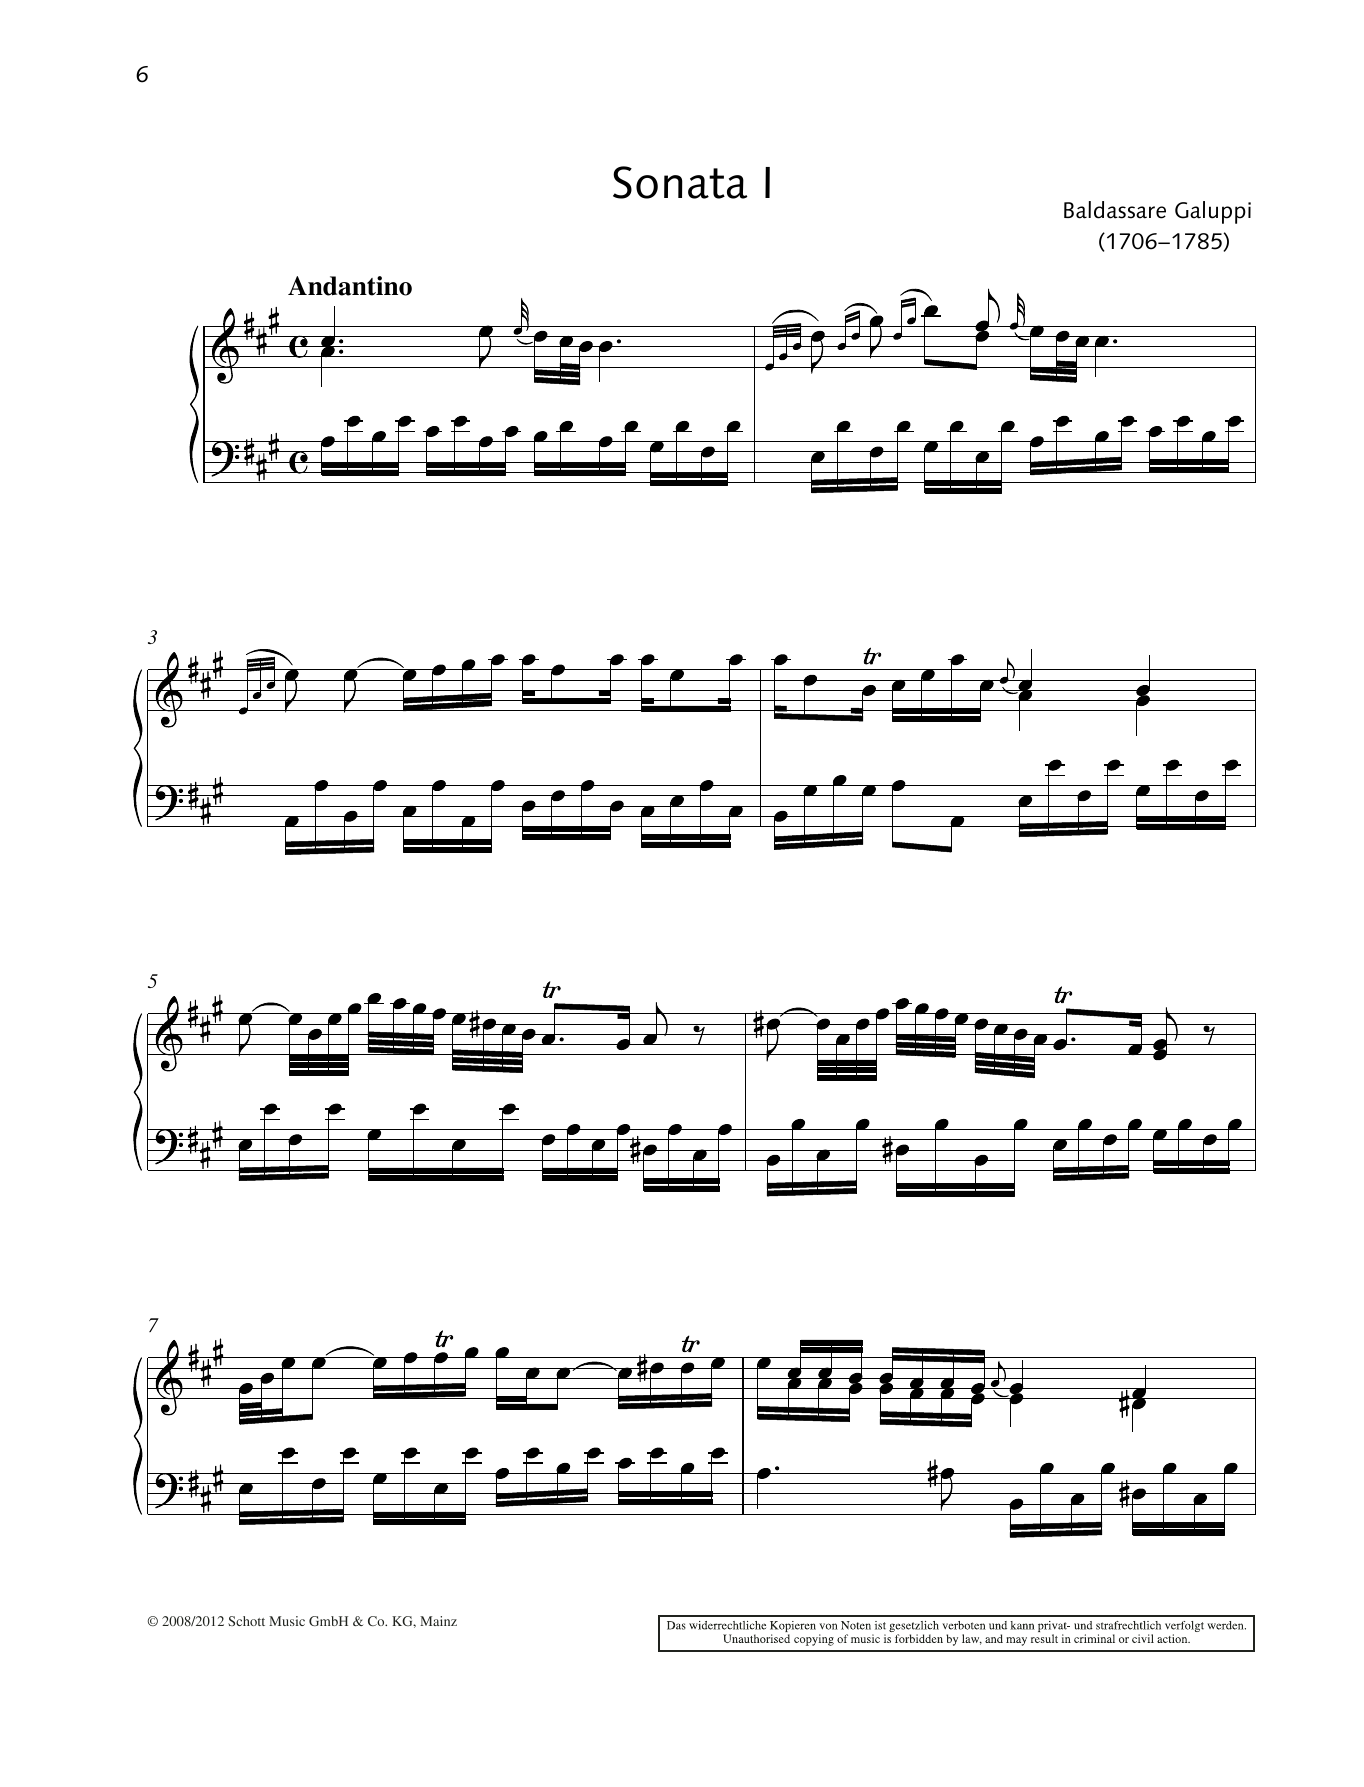 Baldassare Galuppi Sonata I A major sheet music notes and chords arranged for Piano Solo